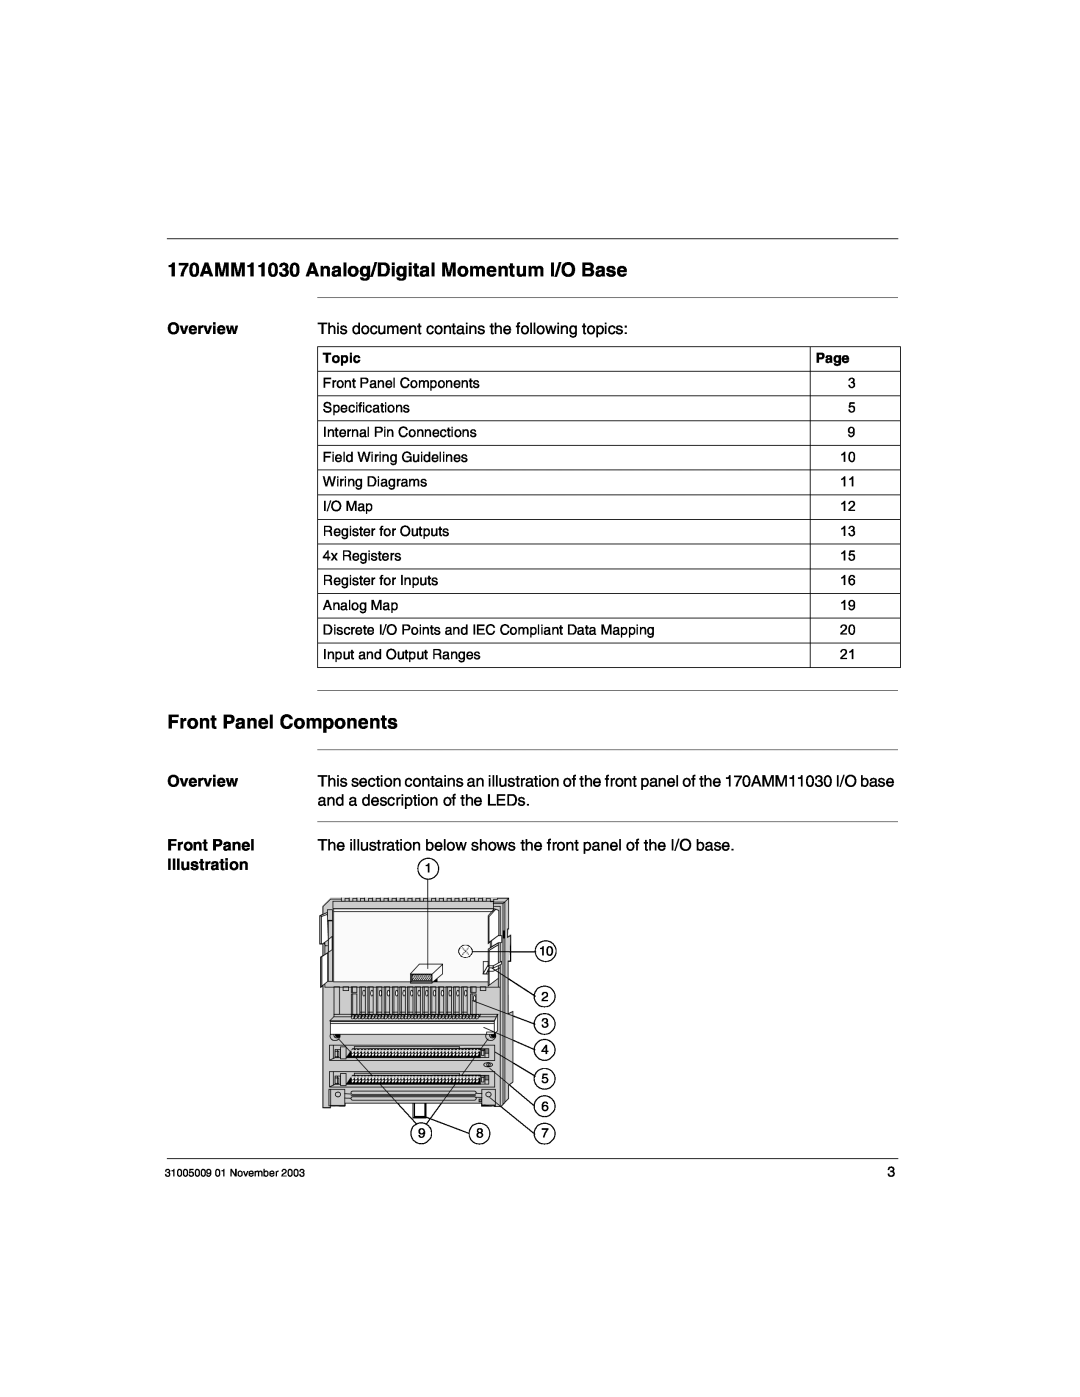 Schneider Electric manual 170AMM11030 Analog/Digital Momentum I/O Base, Front Panel Components, Overview, Illustration 